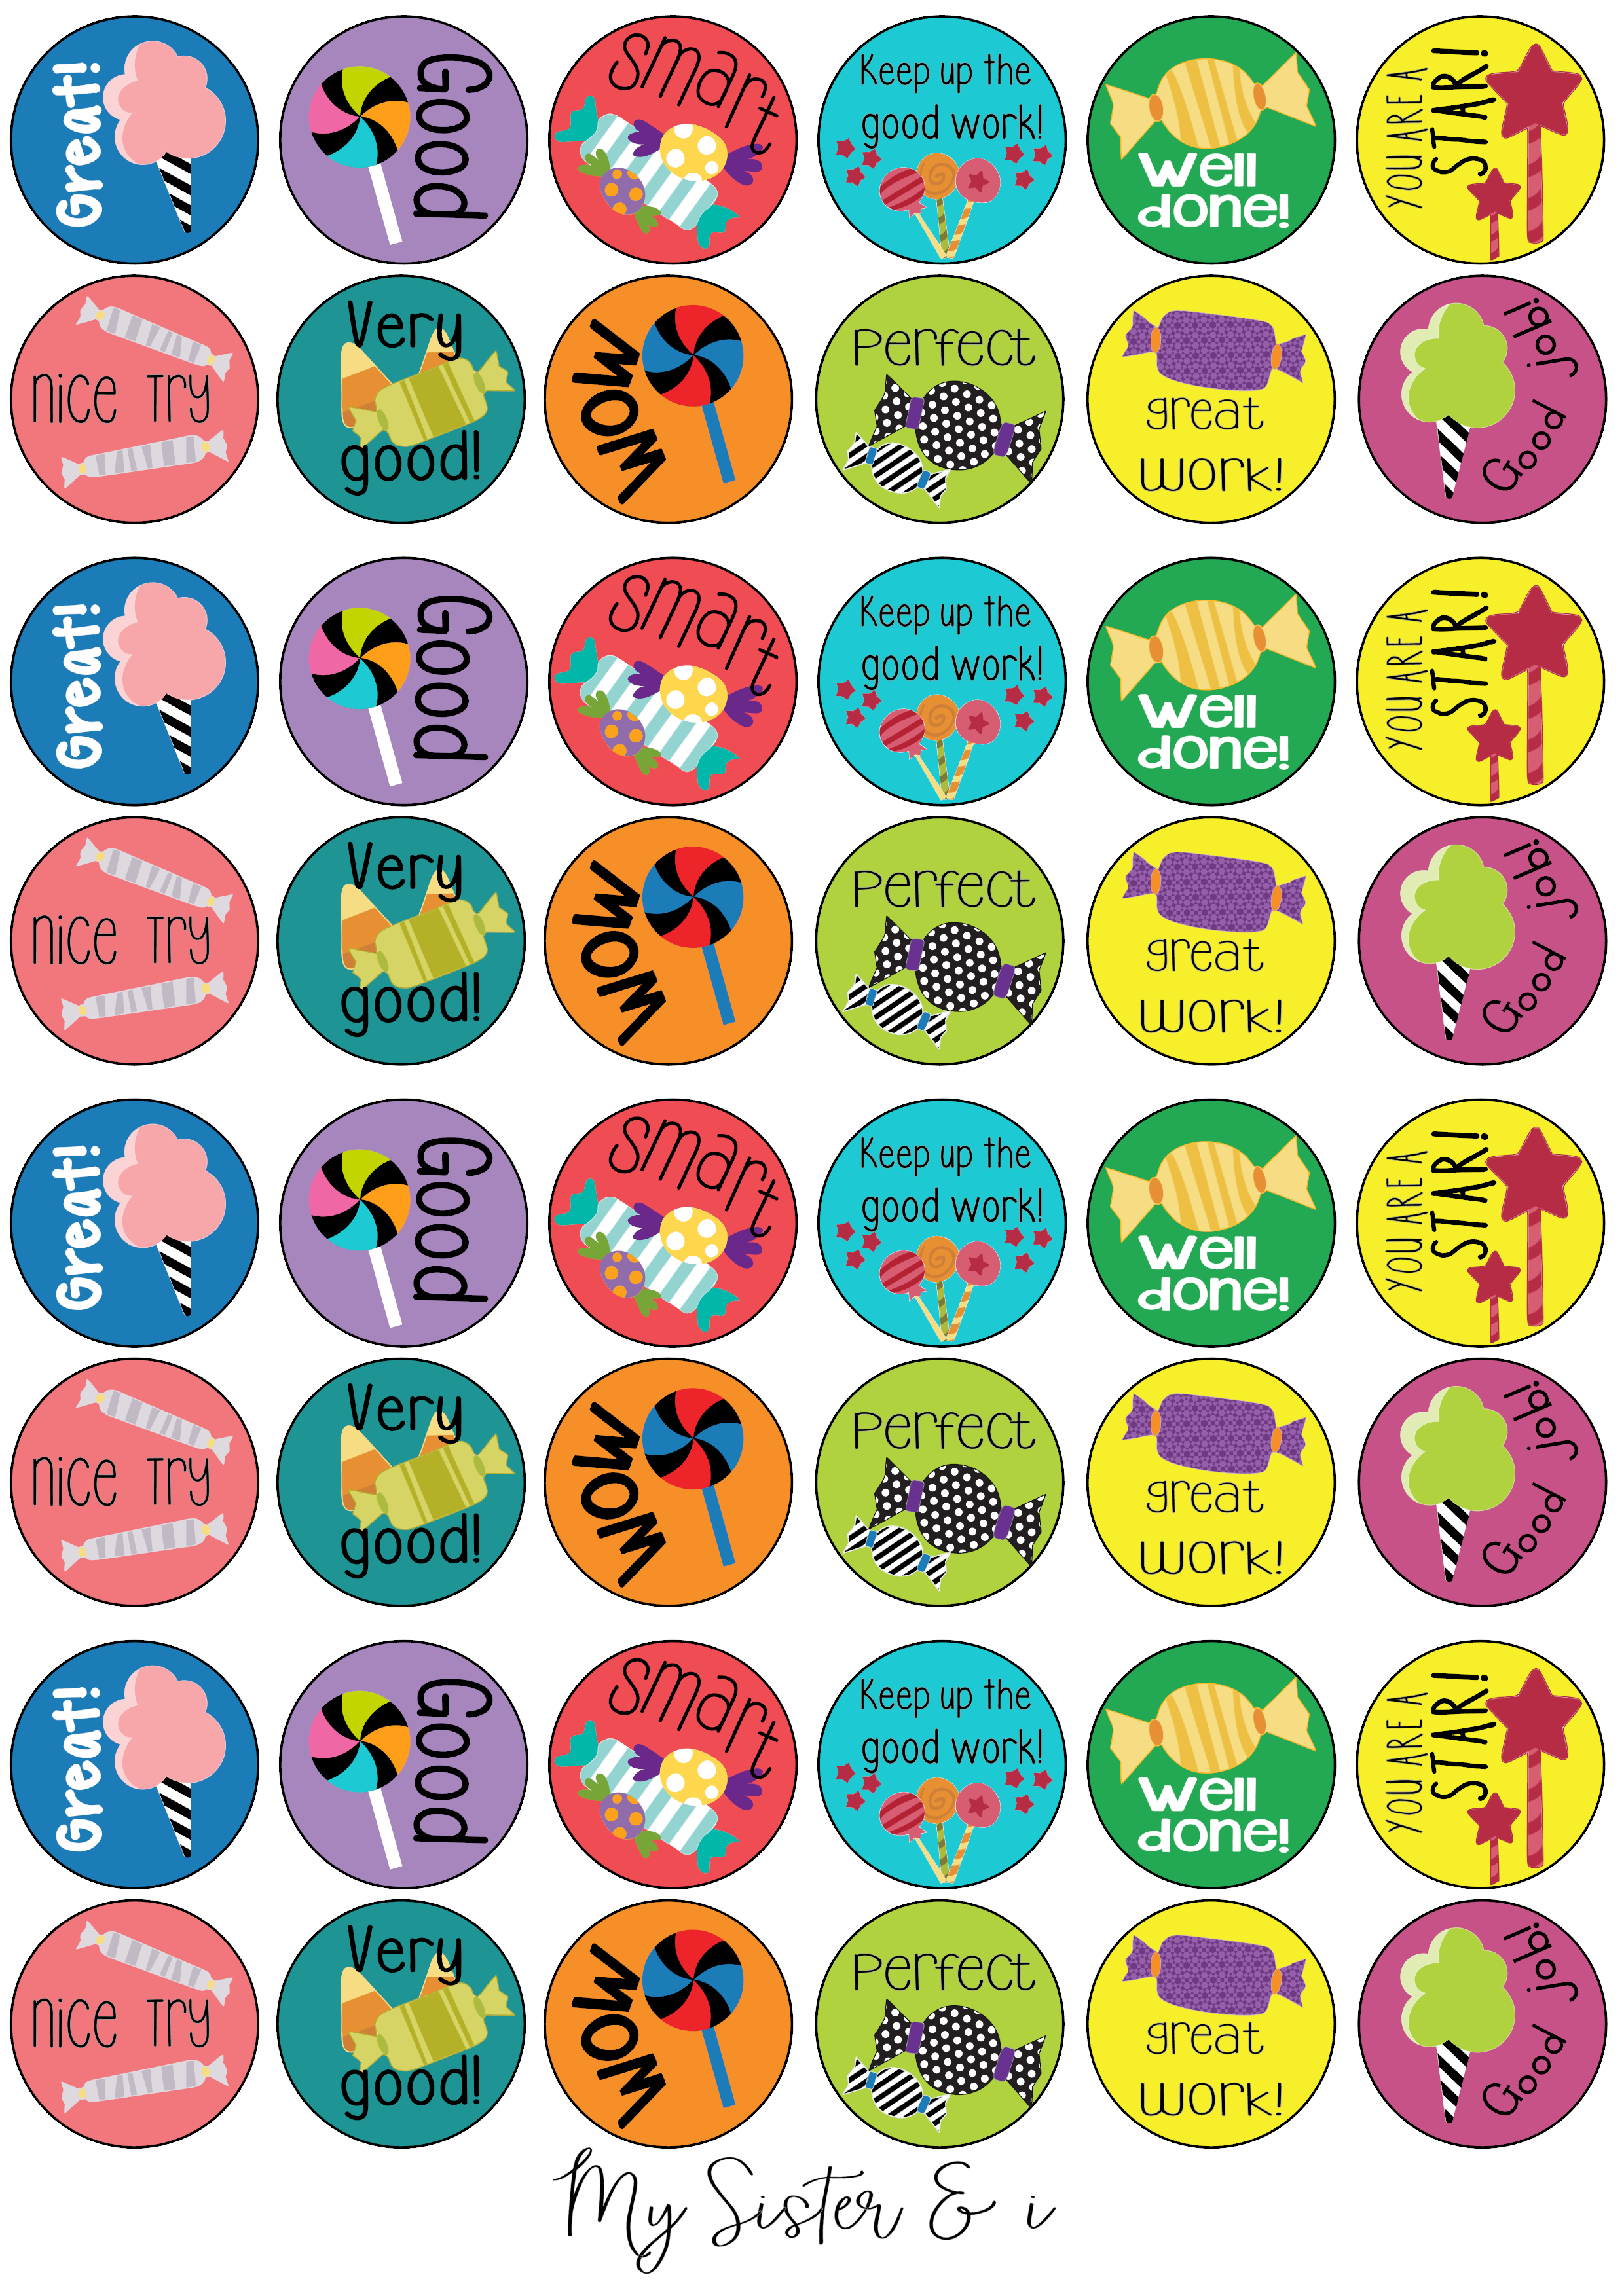 Sweets Theme Reward Stickers